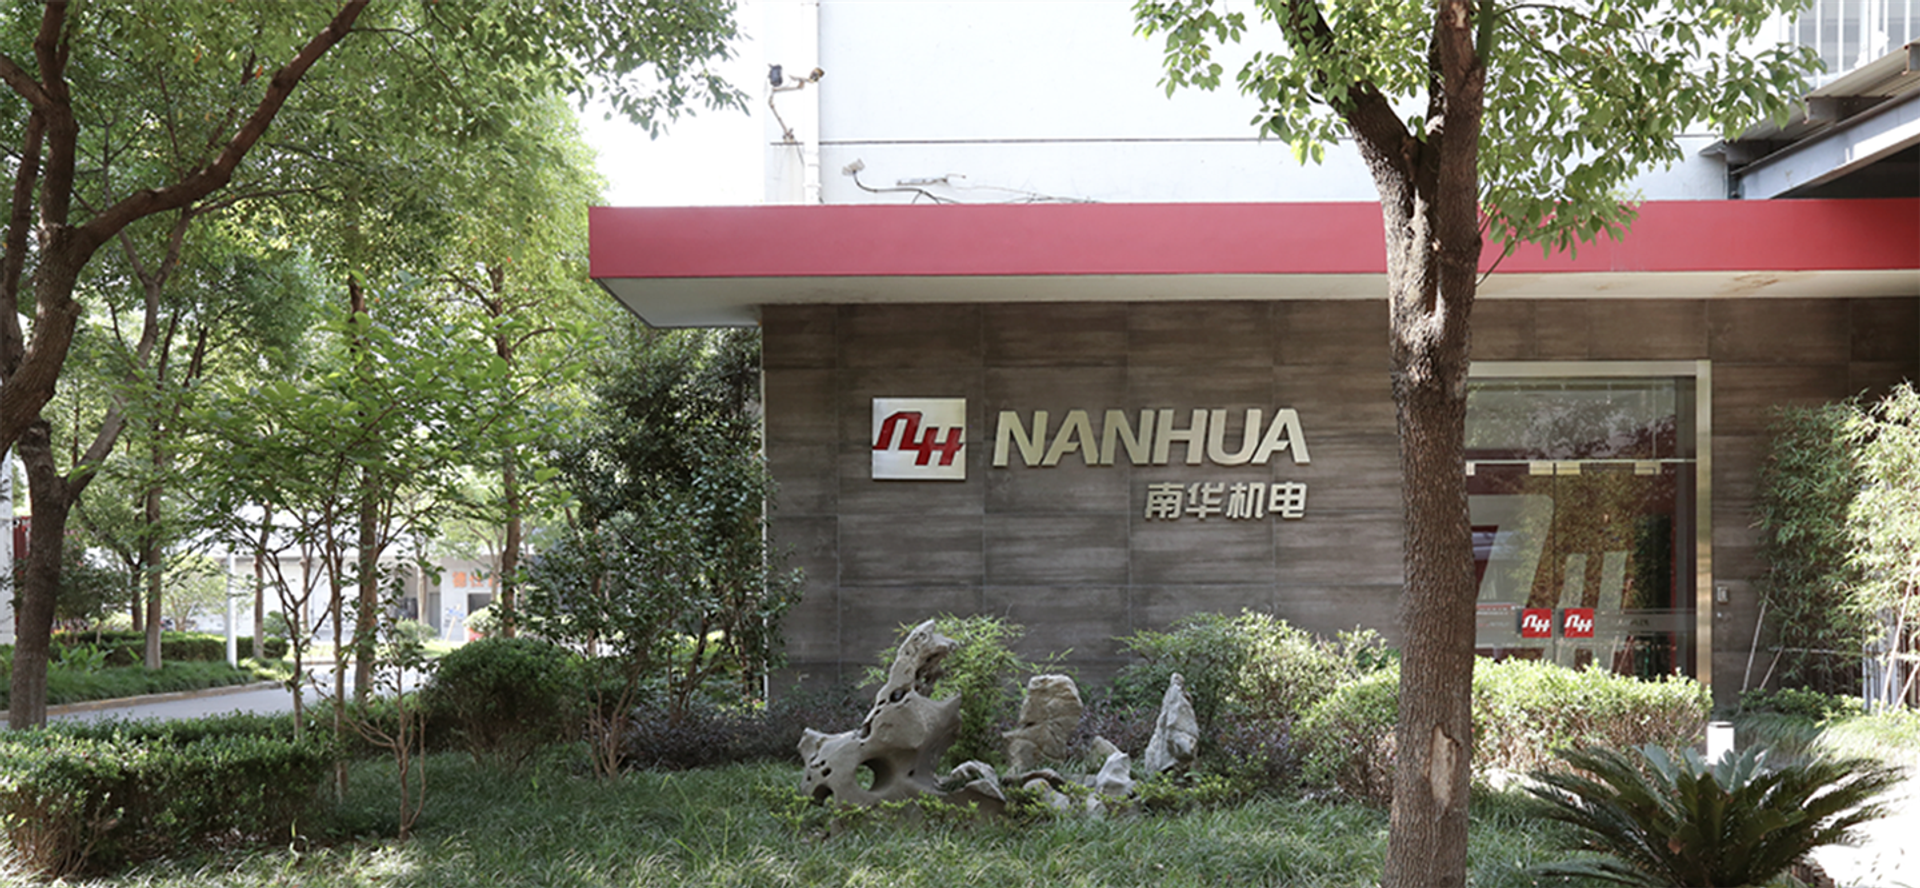 Shanghai Nanhua Electronics Co., Ltd.